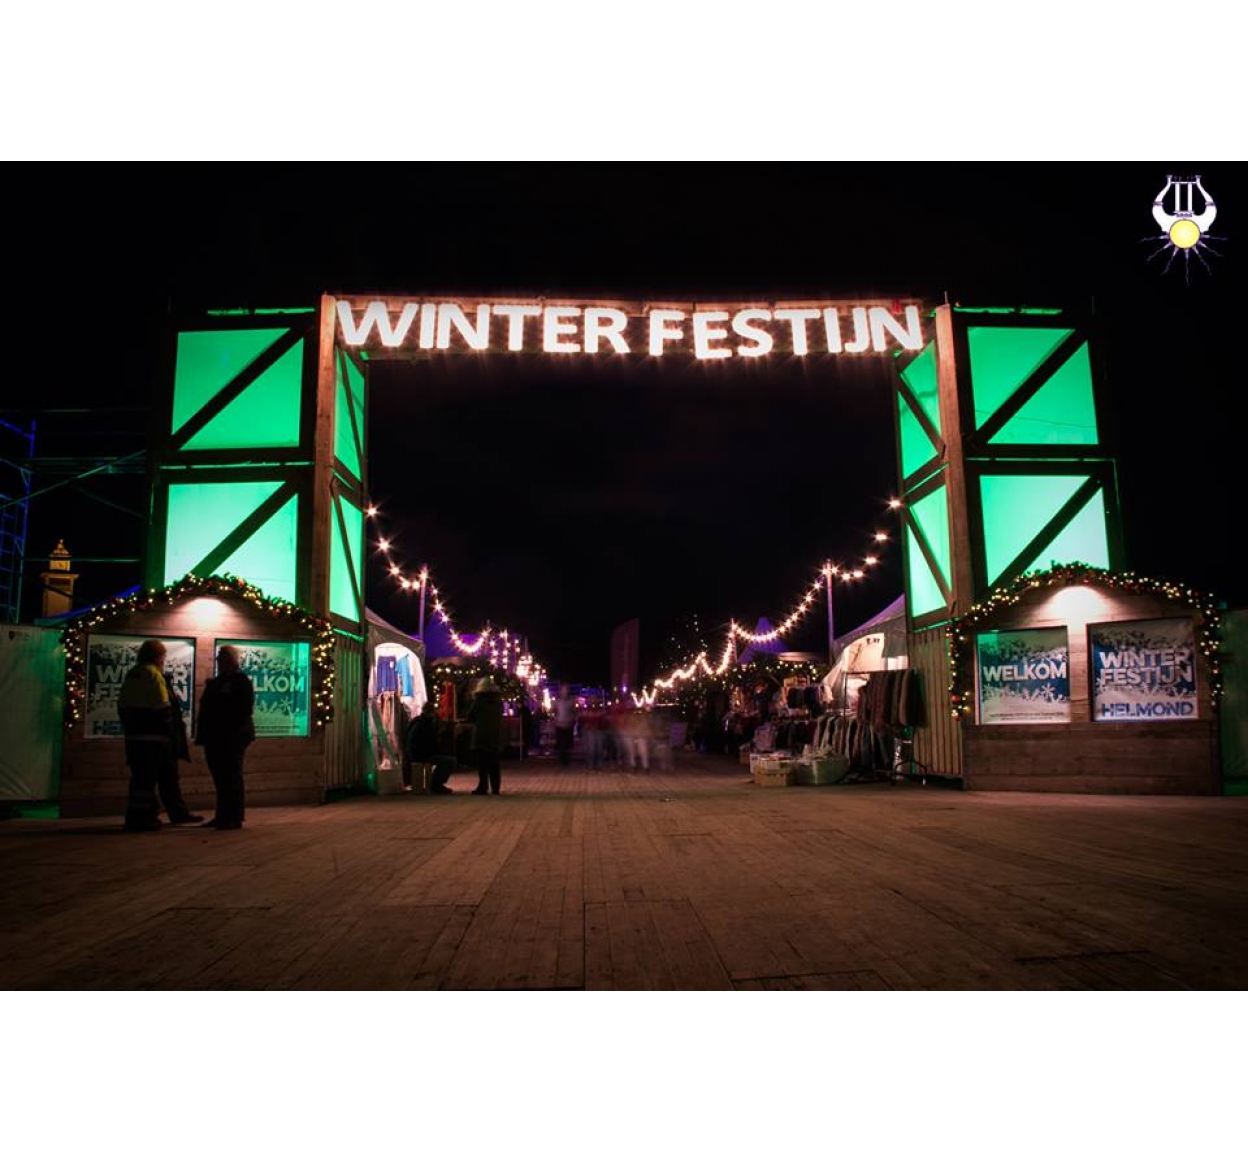 Winterfestijn Helmond 2015